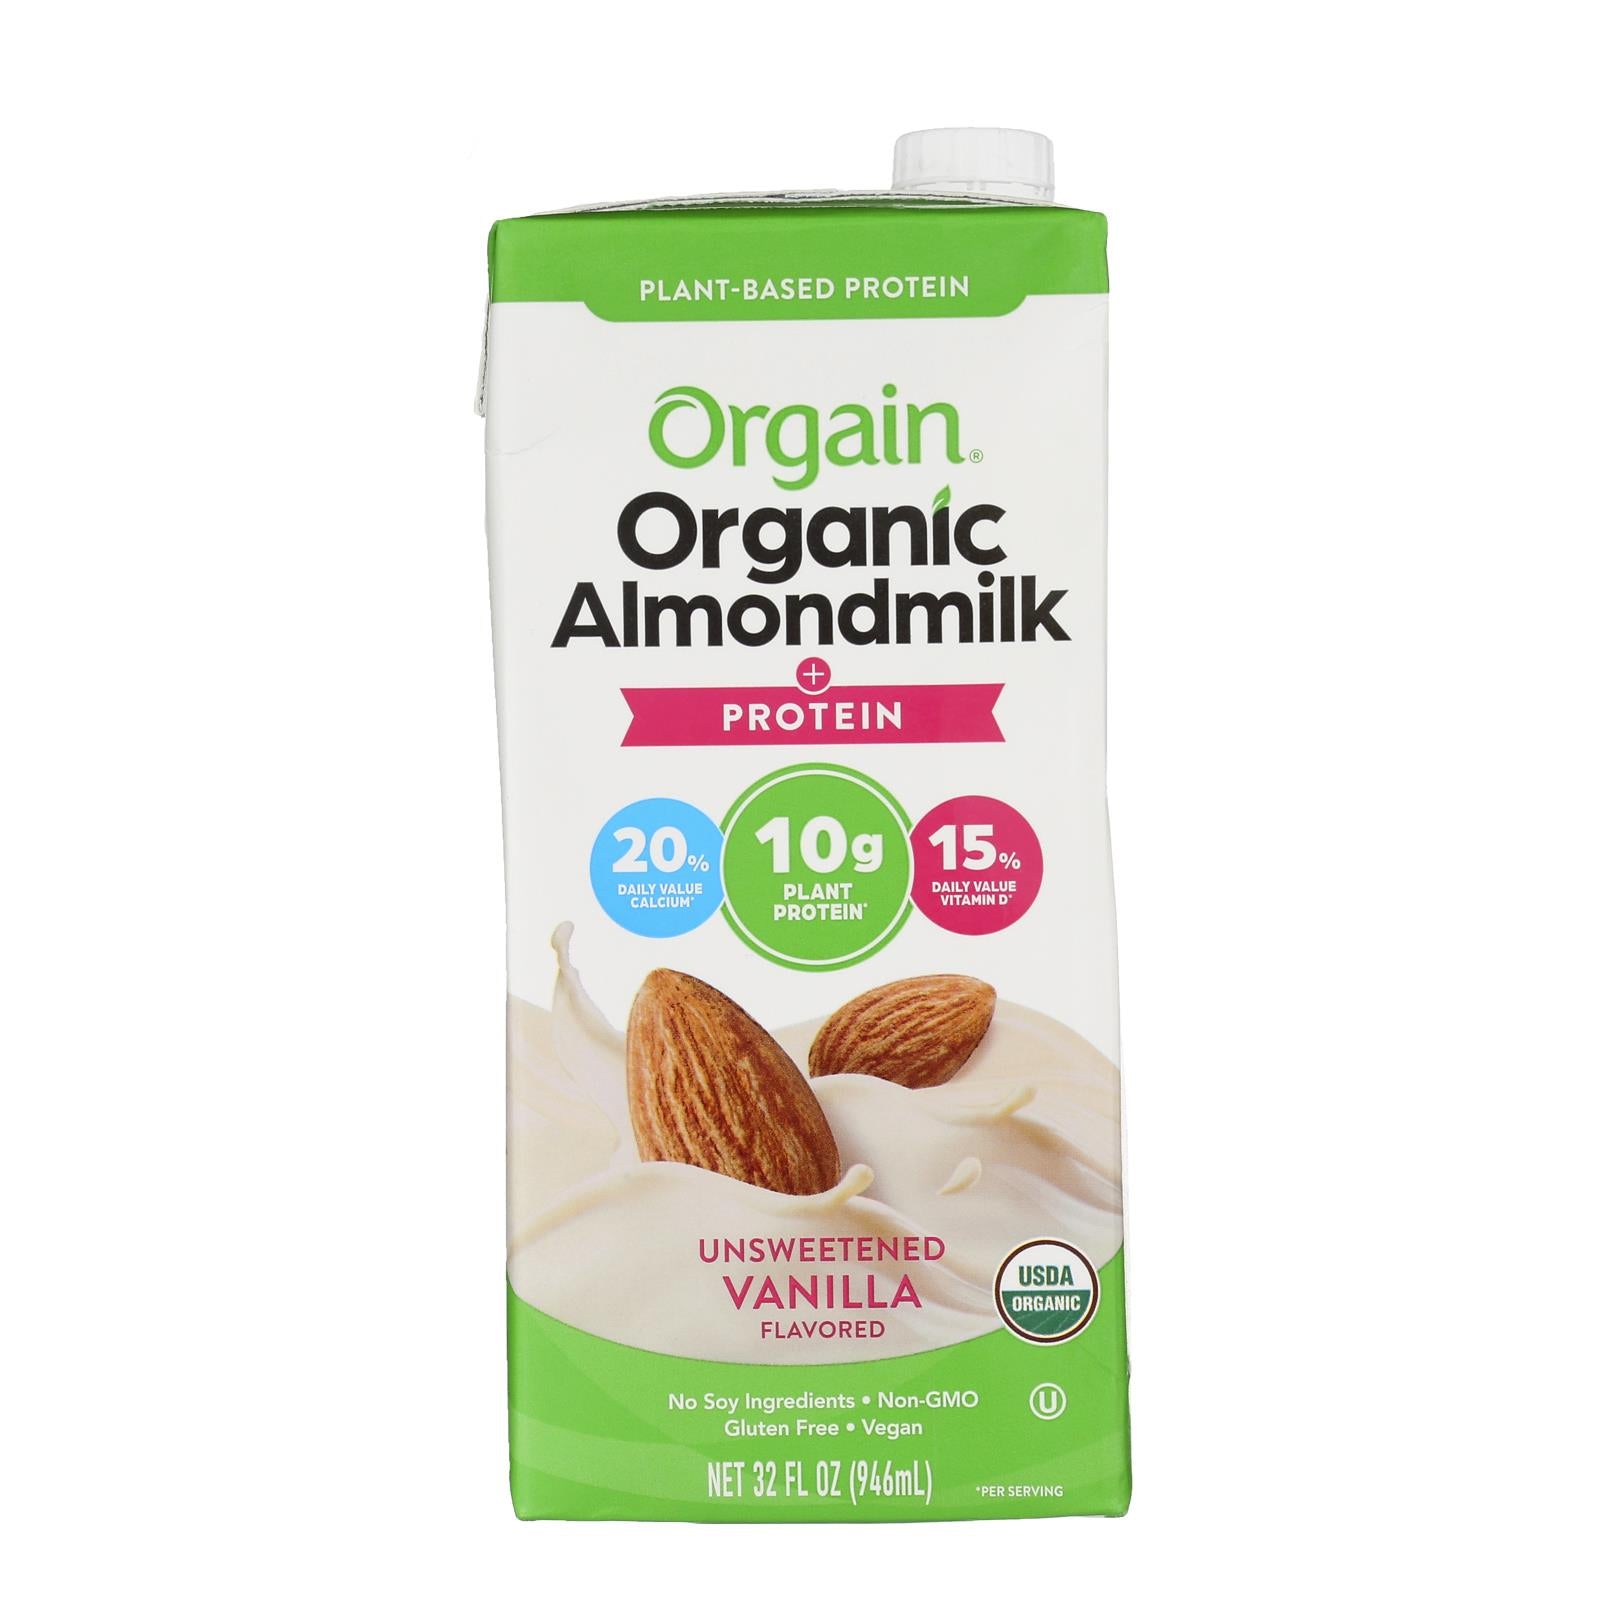 Orgain Organic Protein Almond Milk - Unsweetened Vanilla - Case Of 6 - 32 Fz